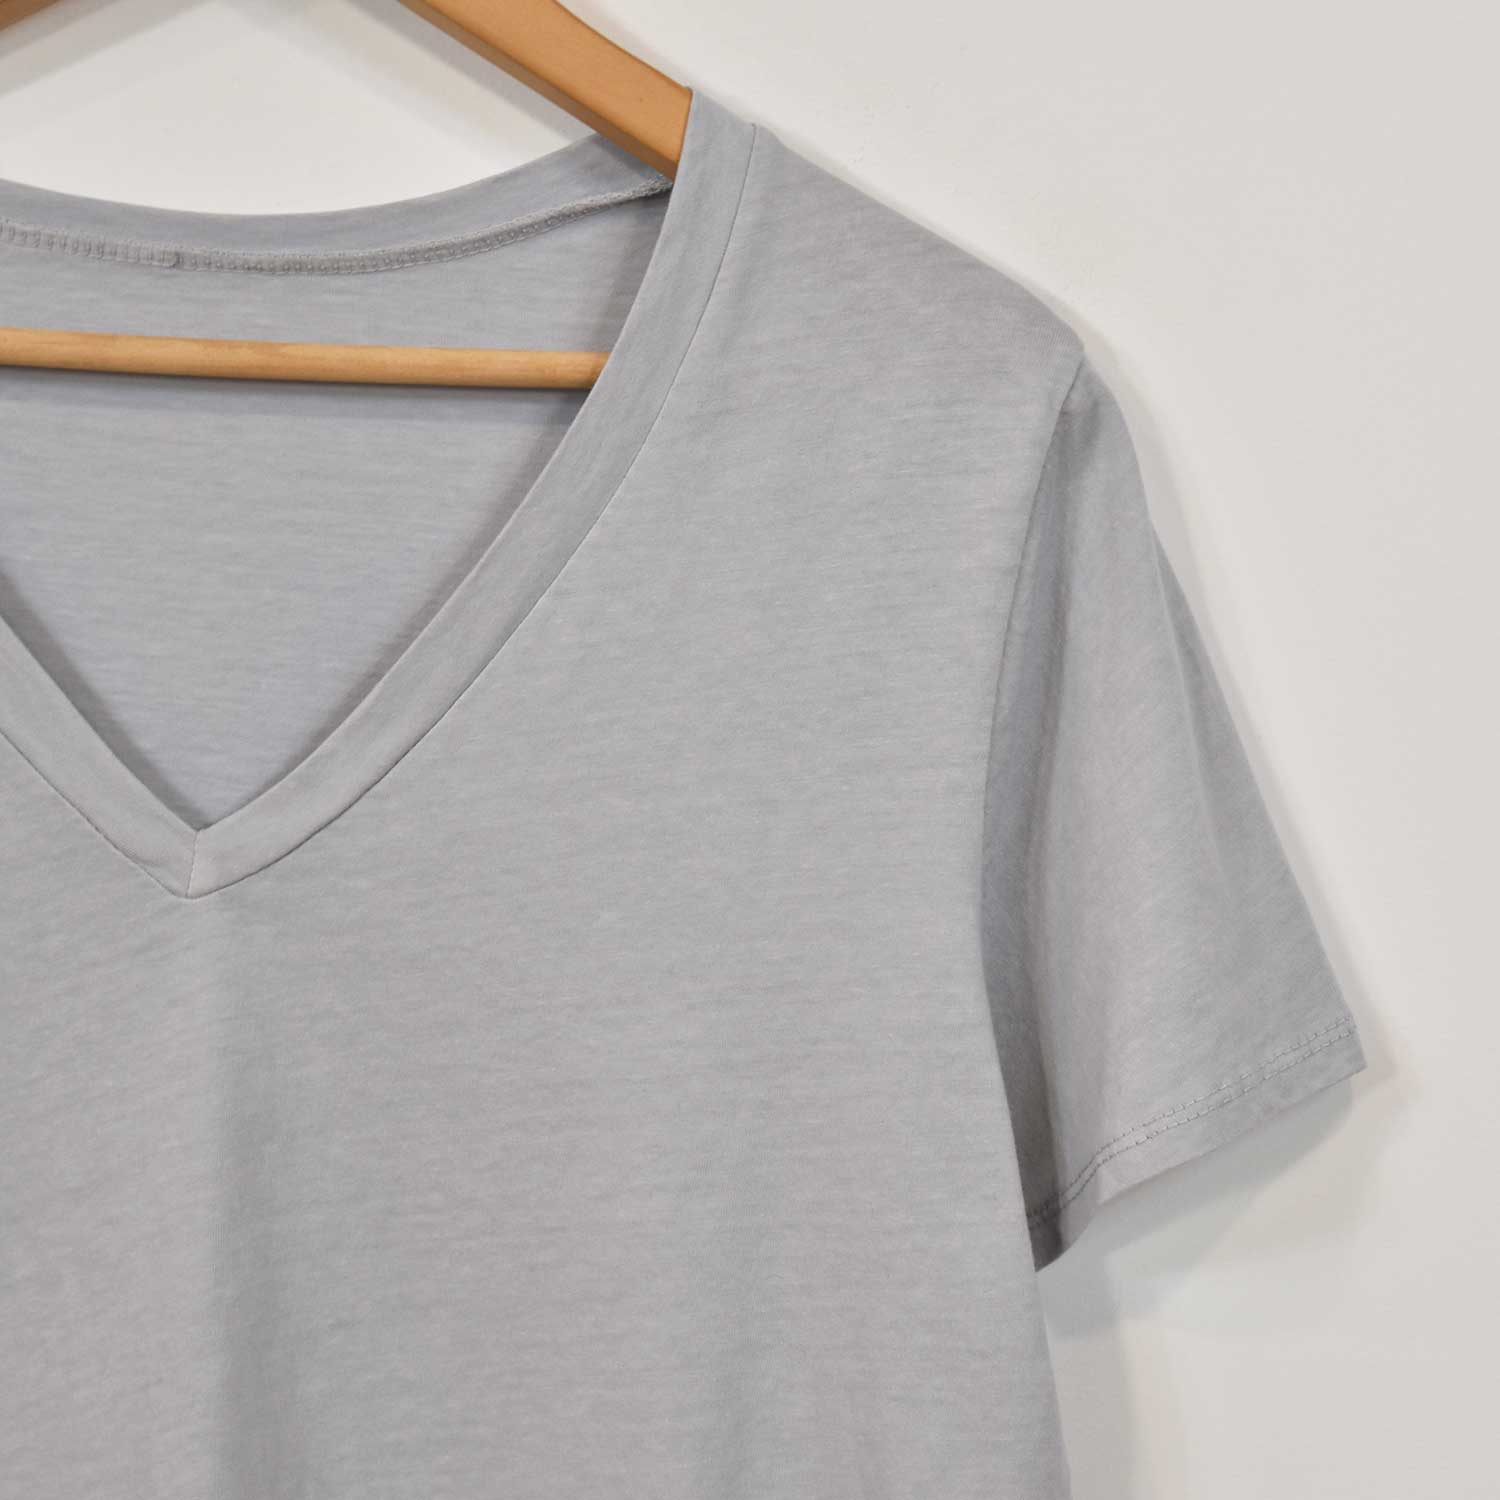 Camiseta pico básica gris